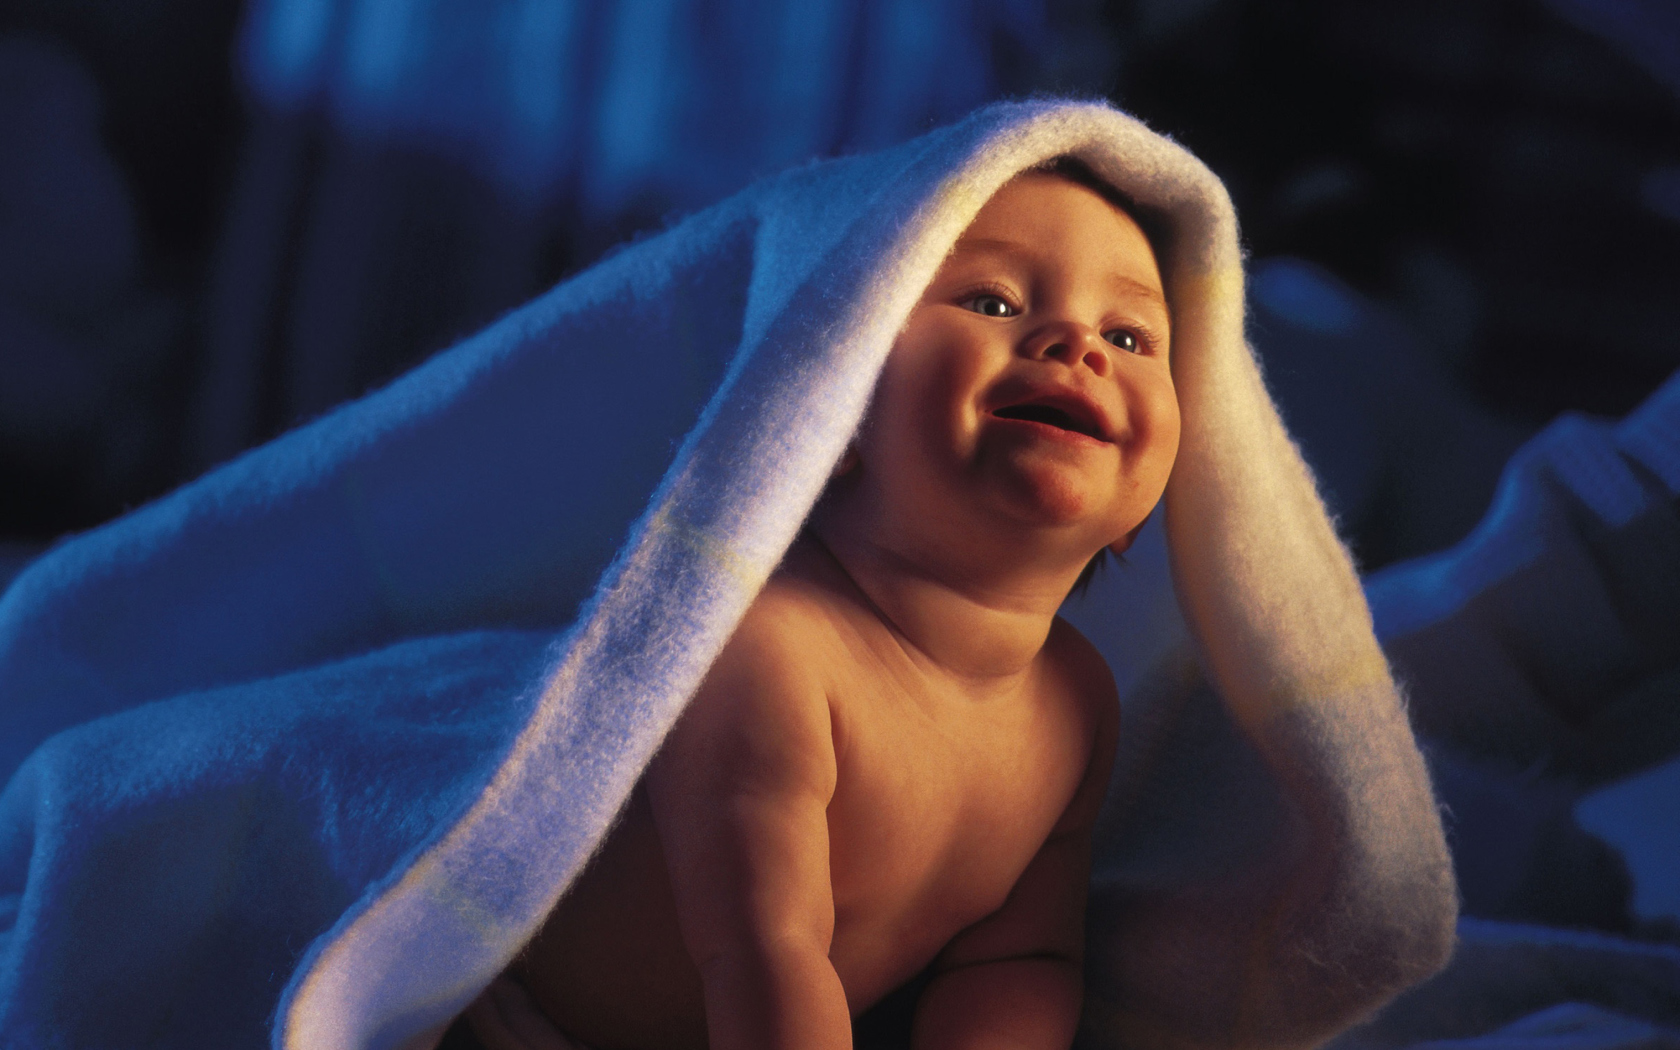 Das Smiling Baby Wallpaper 1680x1050